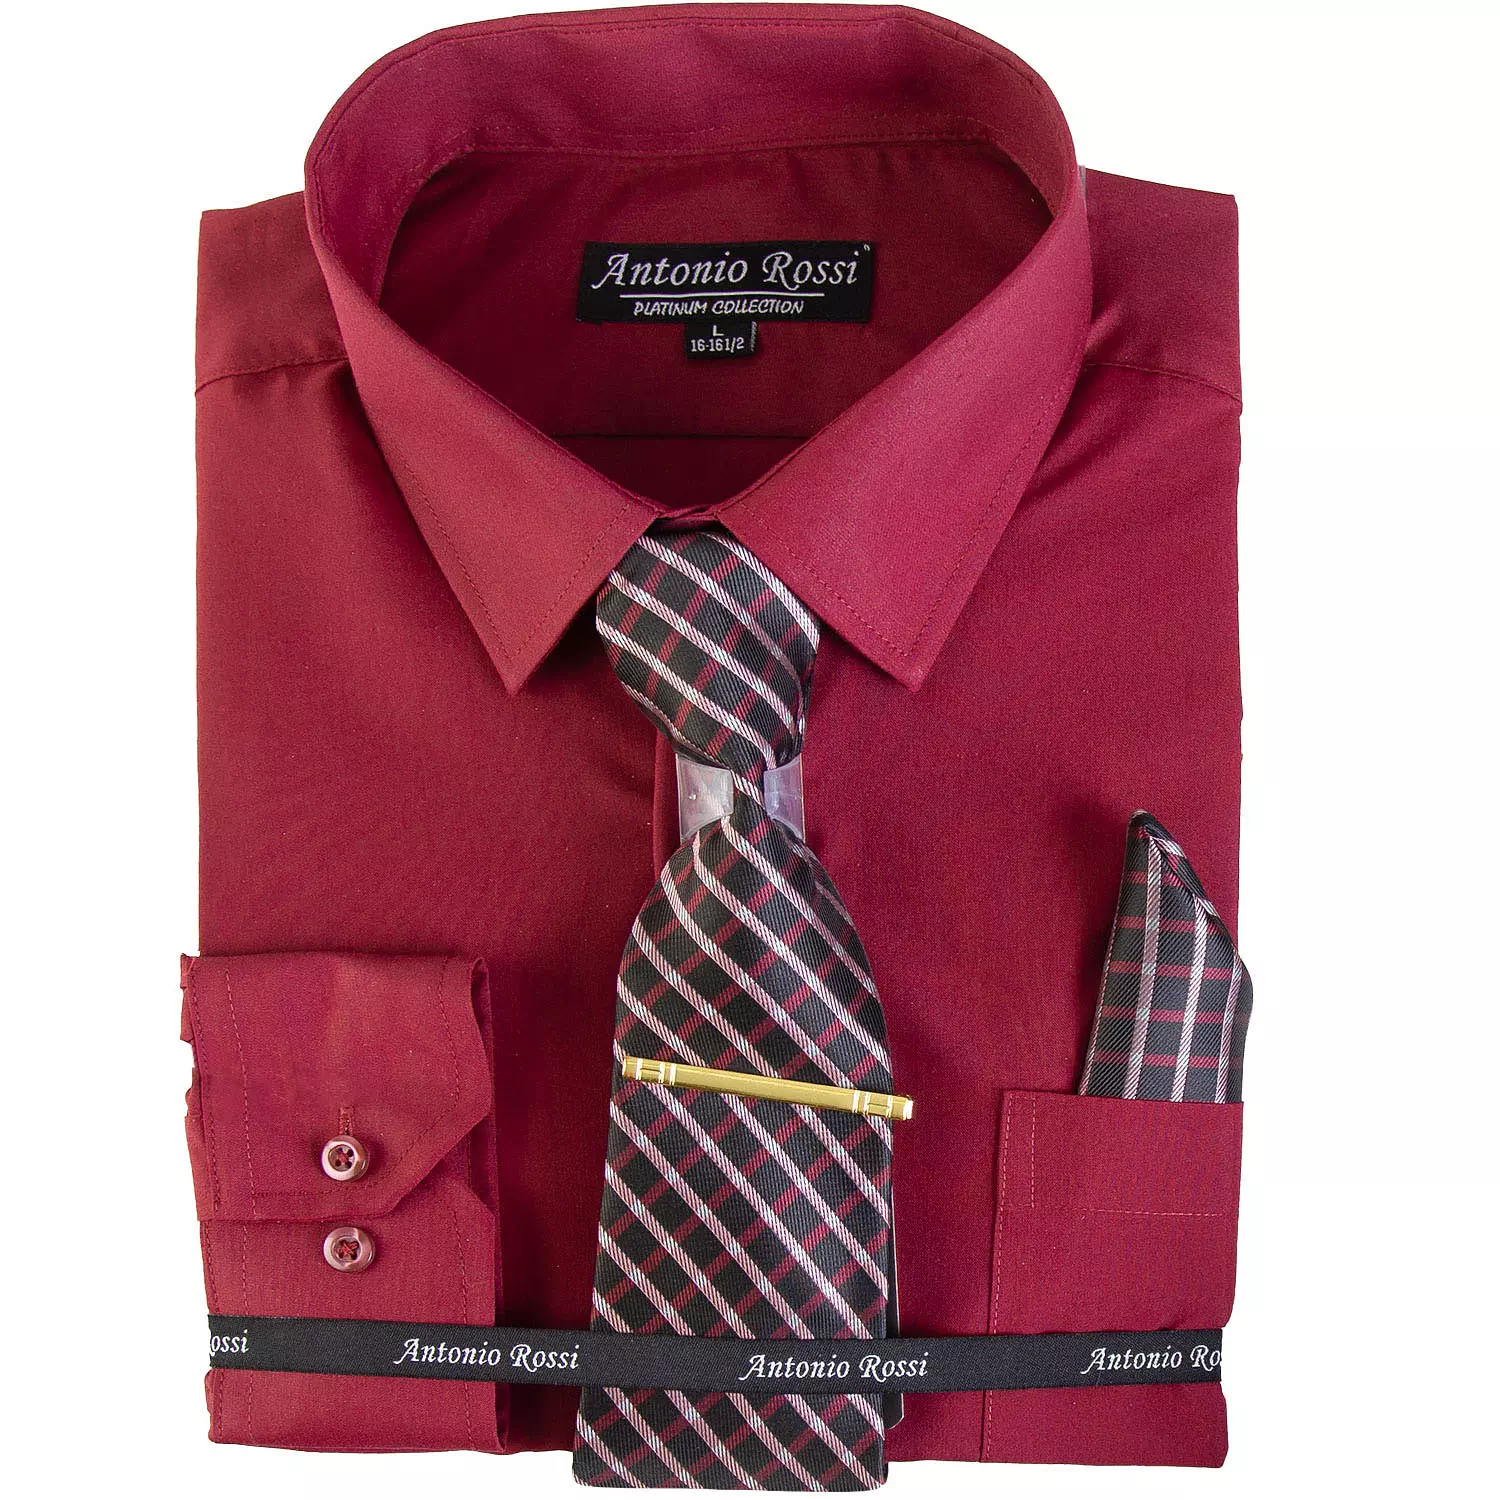 Antonio Rossi - Men's boxed dress shirt with tie, tie clip and hankerchief, burgundy shirt, 16-16.5